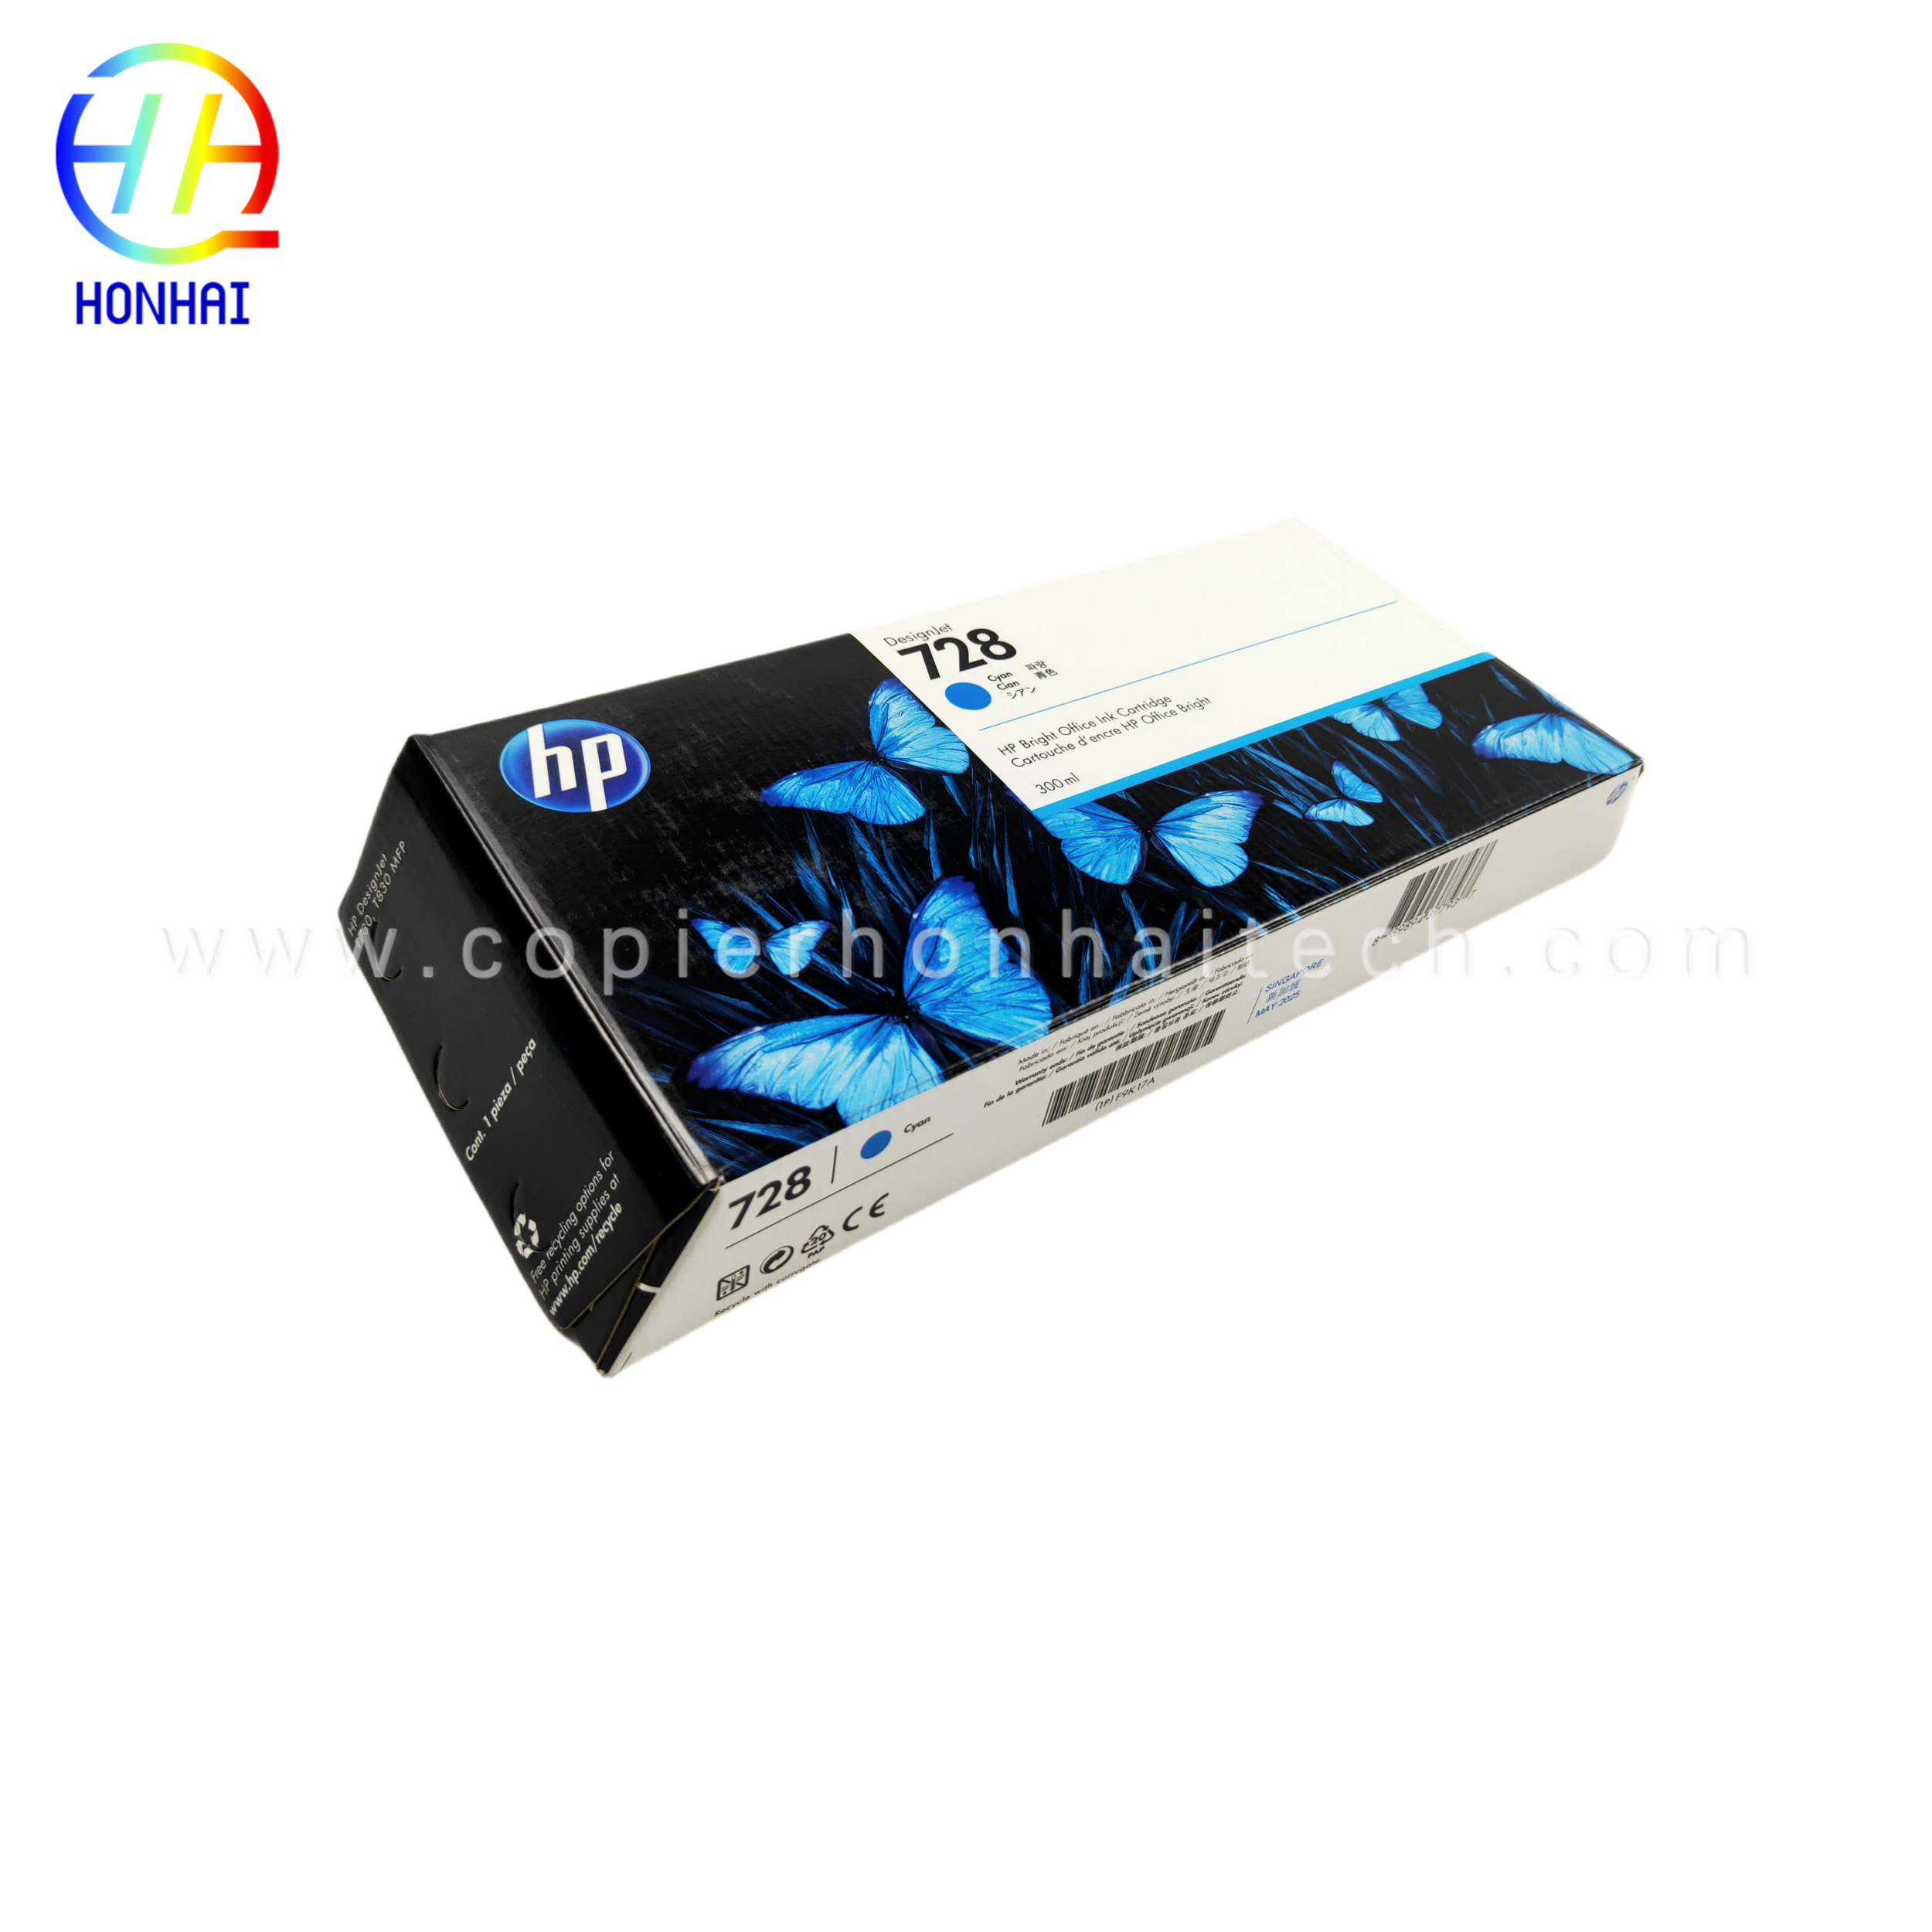 https://www.copierhonhaitech.com/original-new-ink-cartridge-cyan-for-hp-designjet-t730-and-t830-large-format-plotter-printers-and-hp-729-designjet-printhead- 728-f9k17a-tuote/